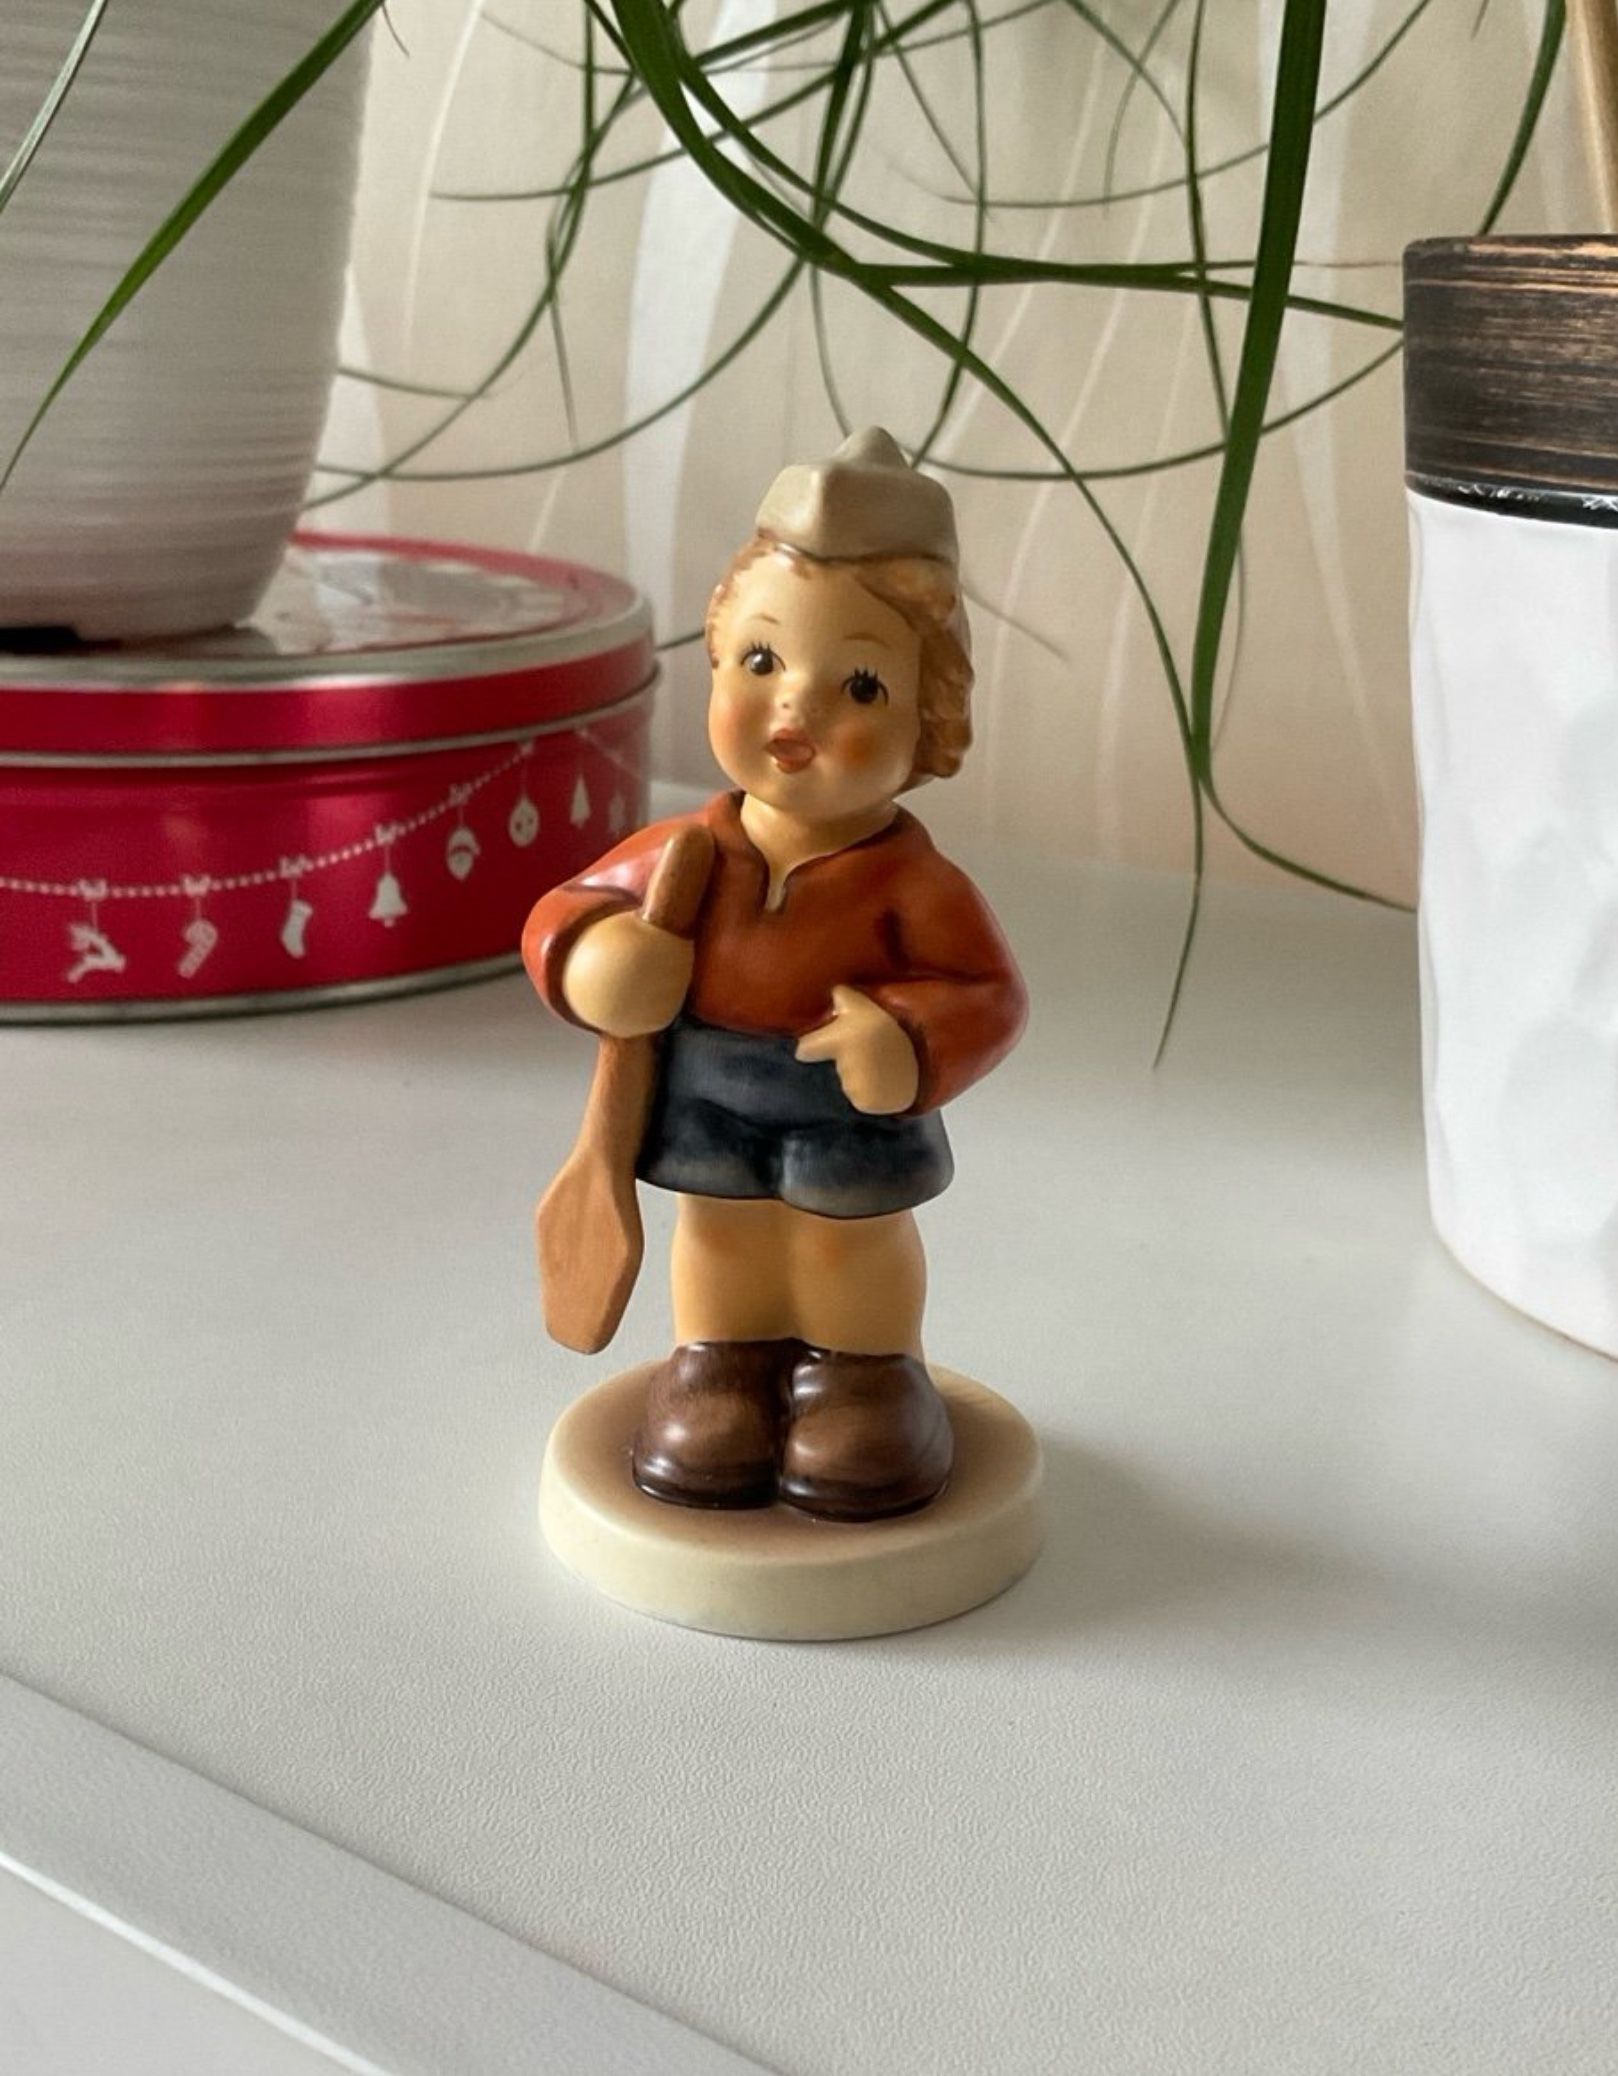 Hummel First Mate Figurine, almost 4” Tall